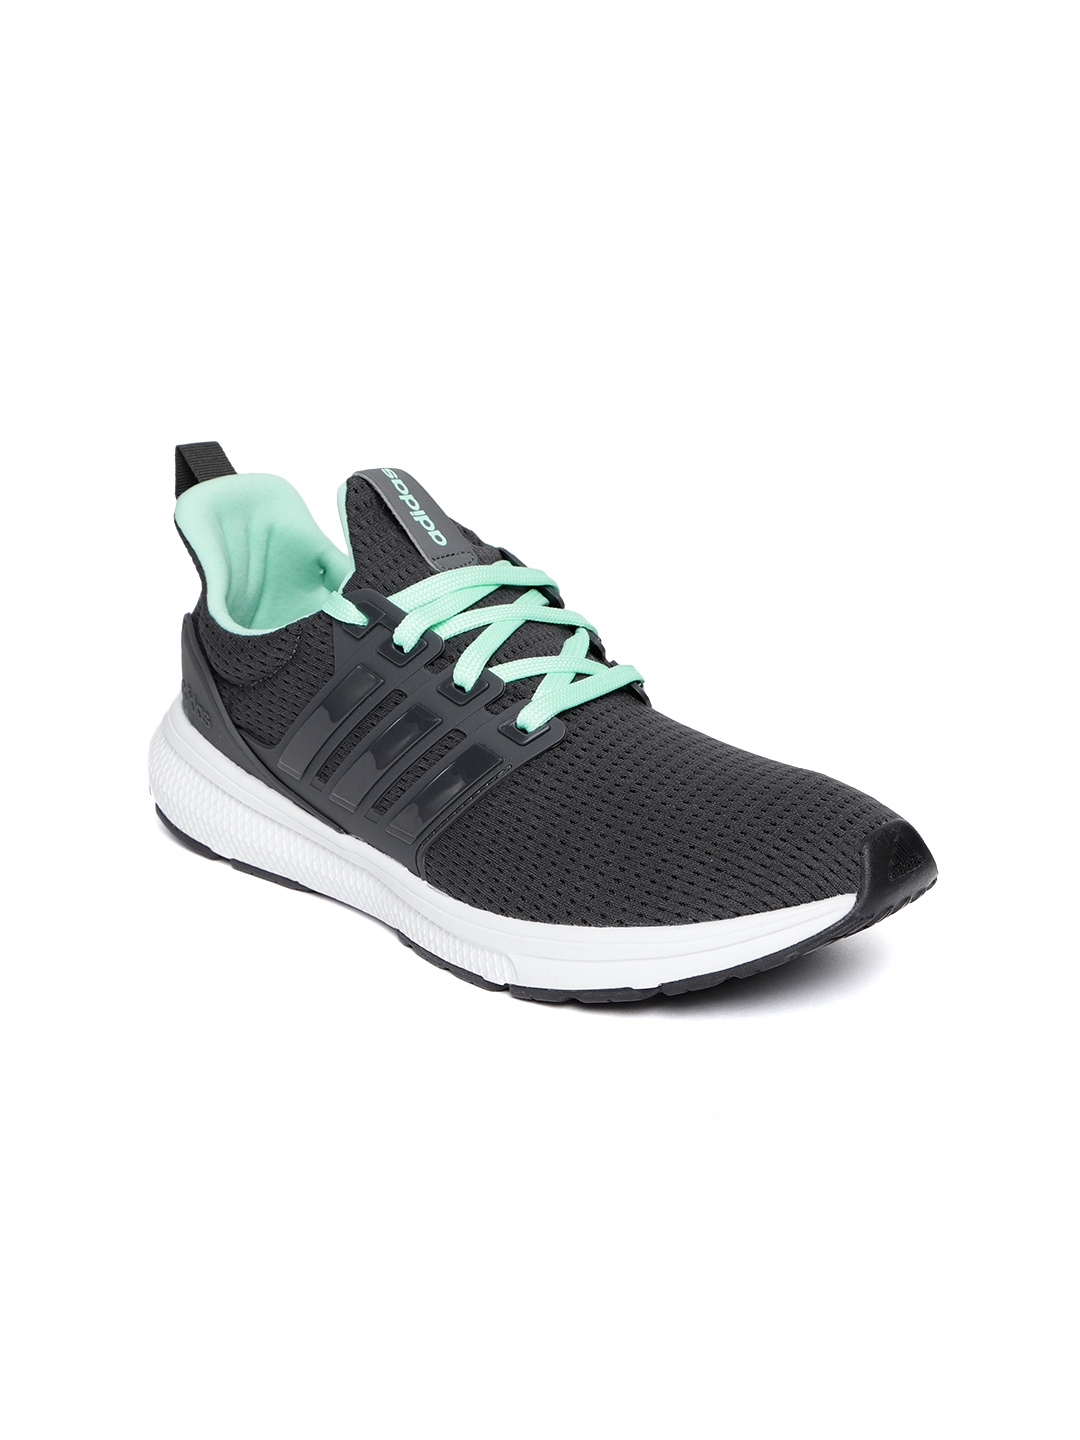 adidas jerzo grey running shoes